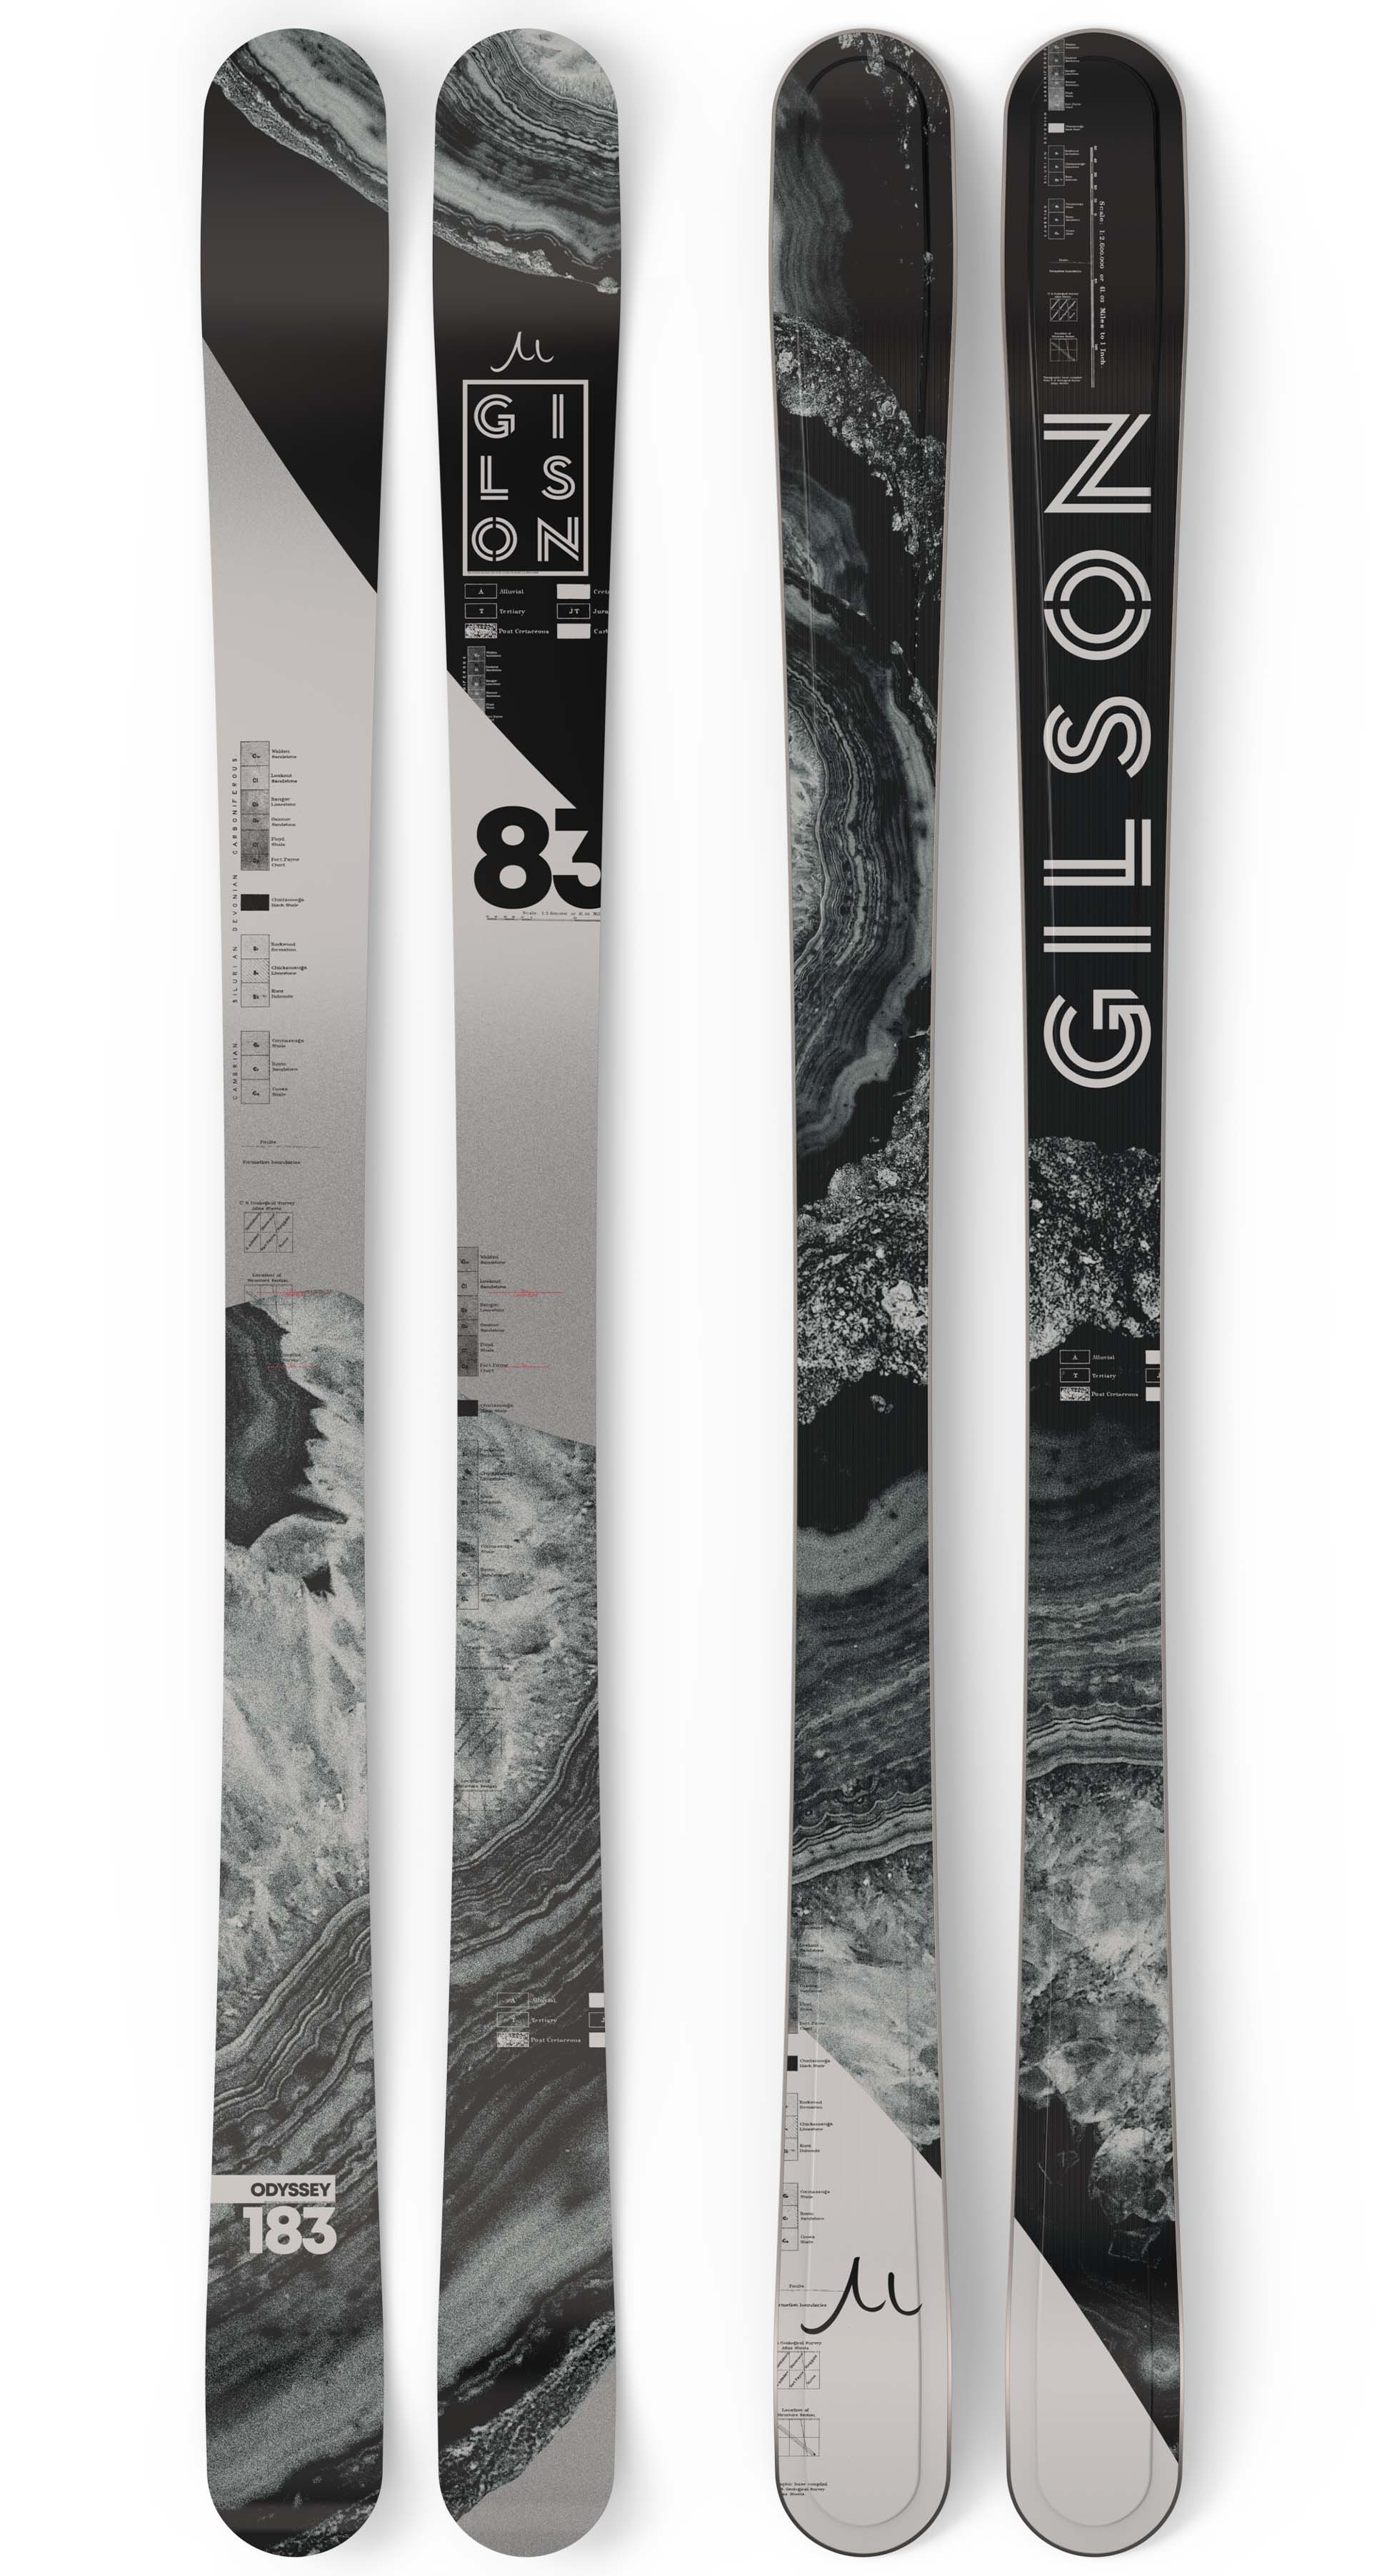 2022 odyssey skis large